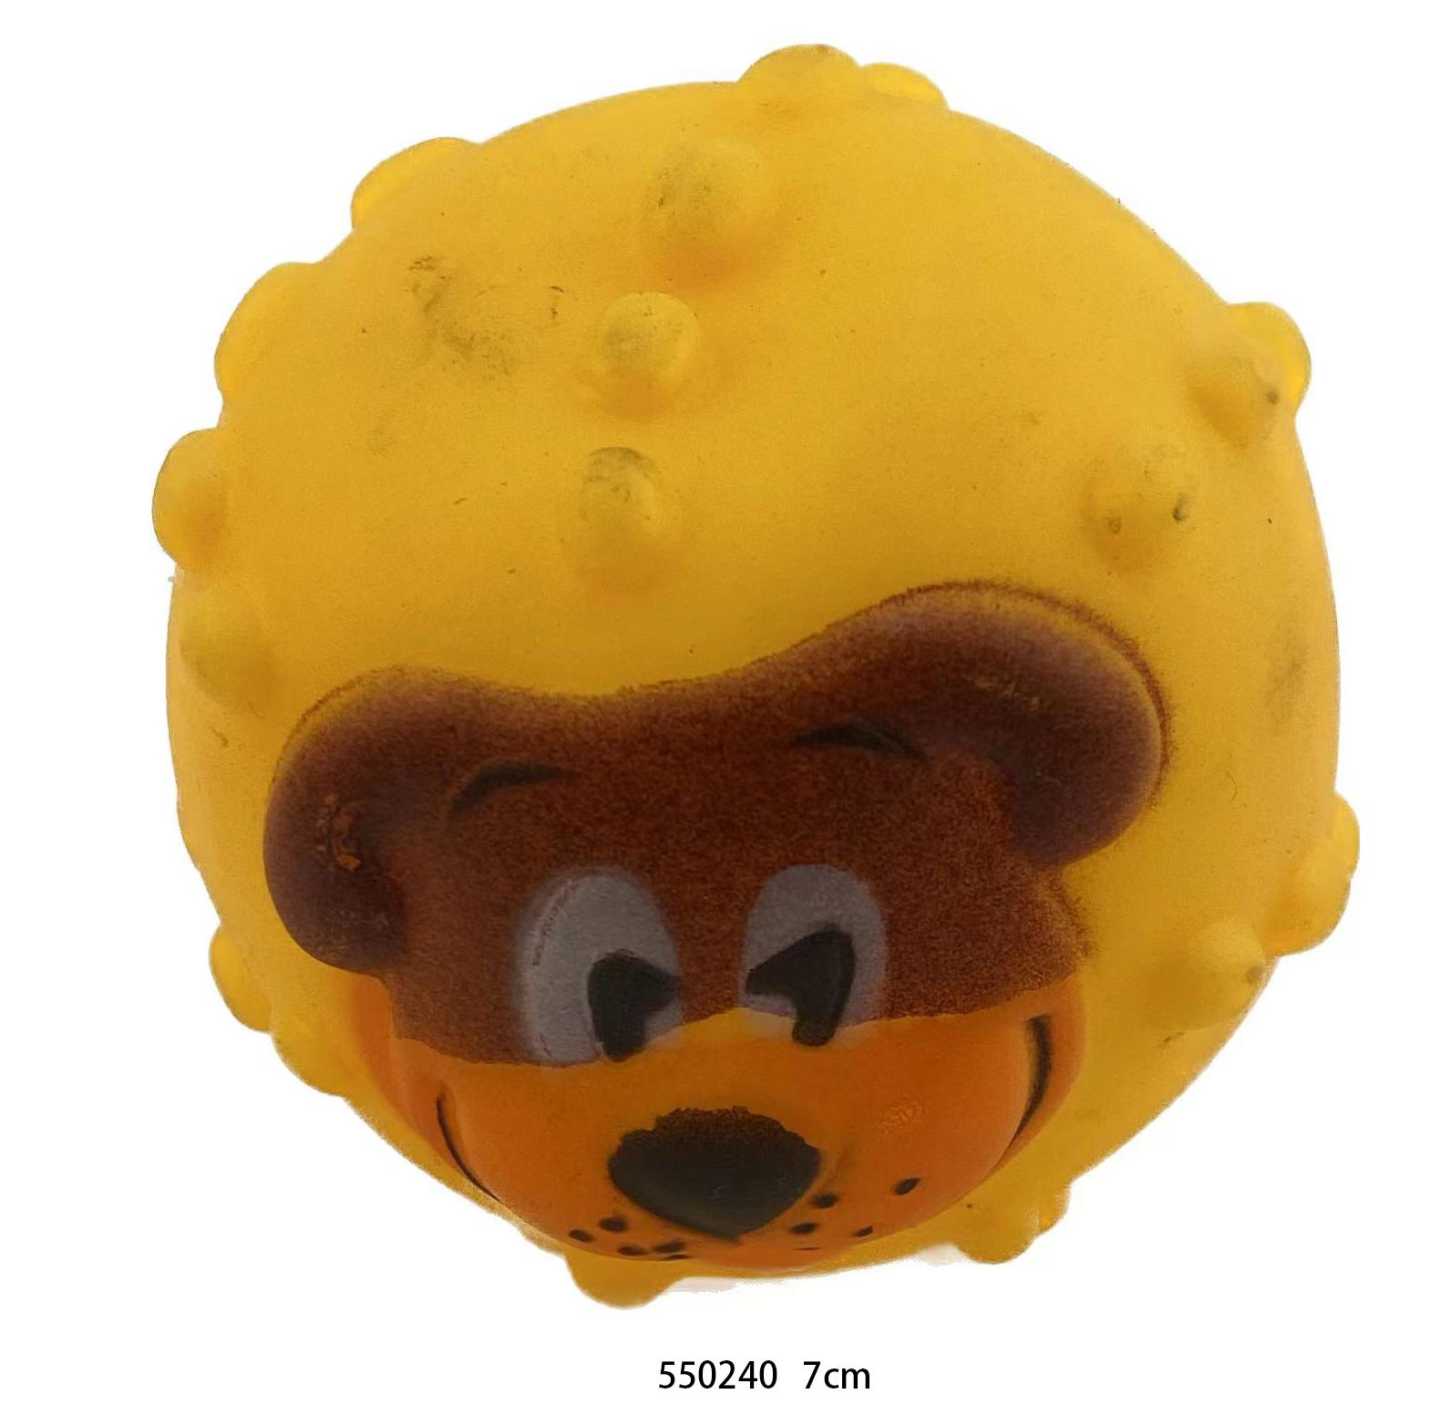 Dog toy Latex ball - 7cm - 550240